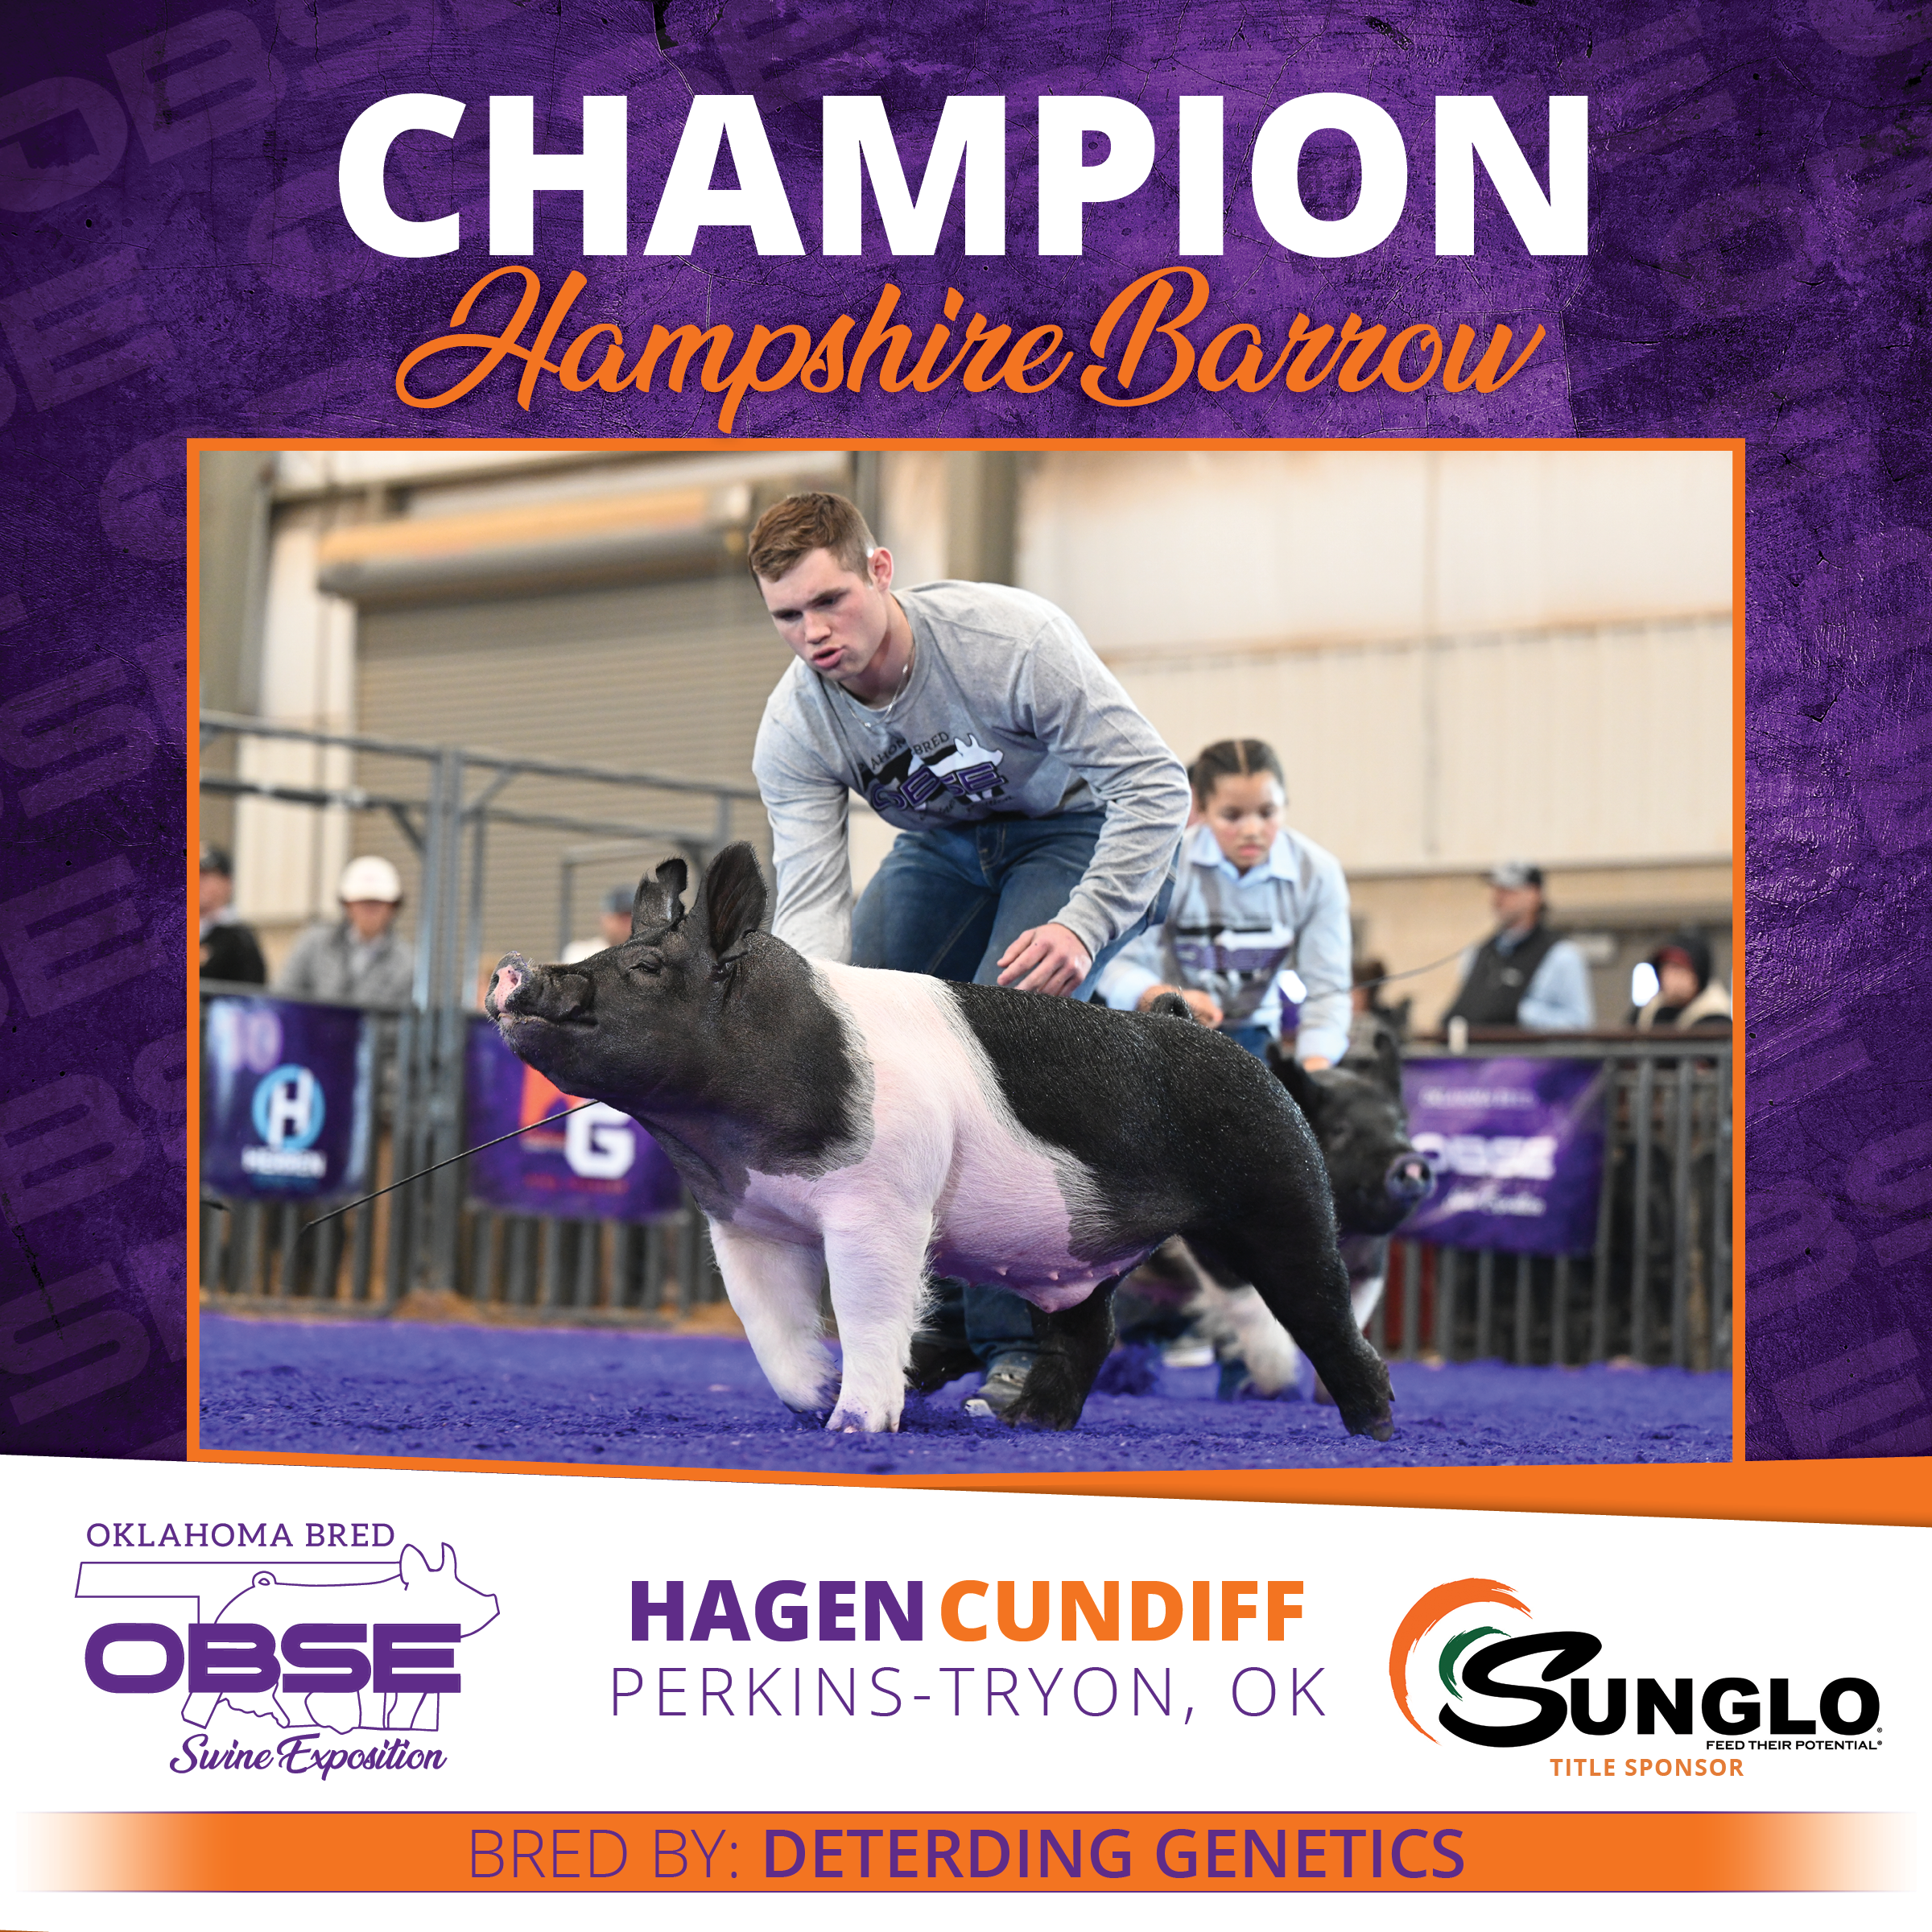 Champion Hamp Barrow (1).png